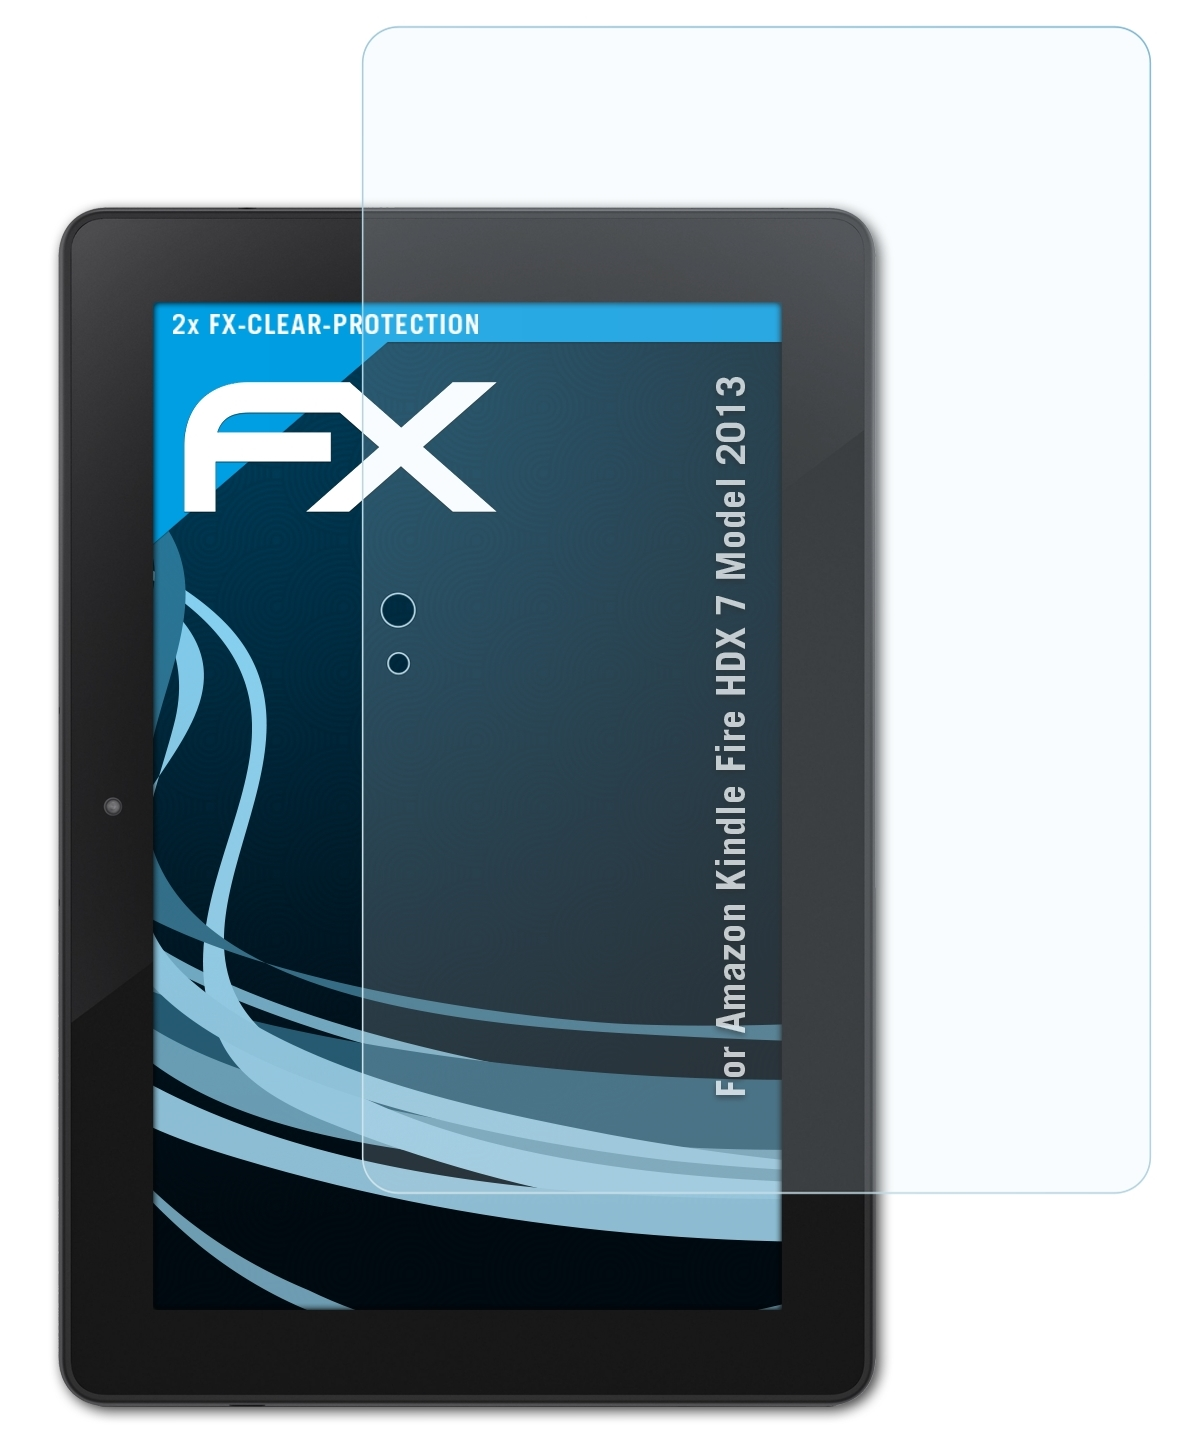 2013)) Displayschutz(für ATFOLIX 2x Amazon 7 Kindle Fire FX-Clear HDX (Model